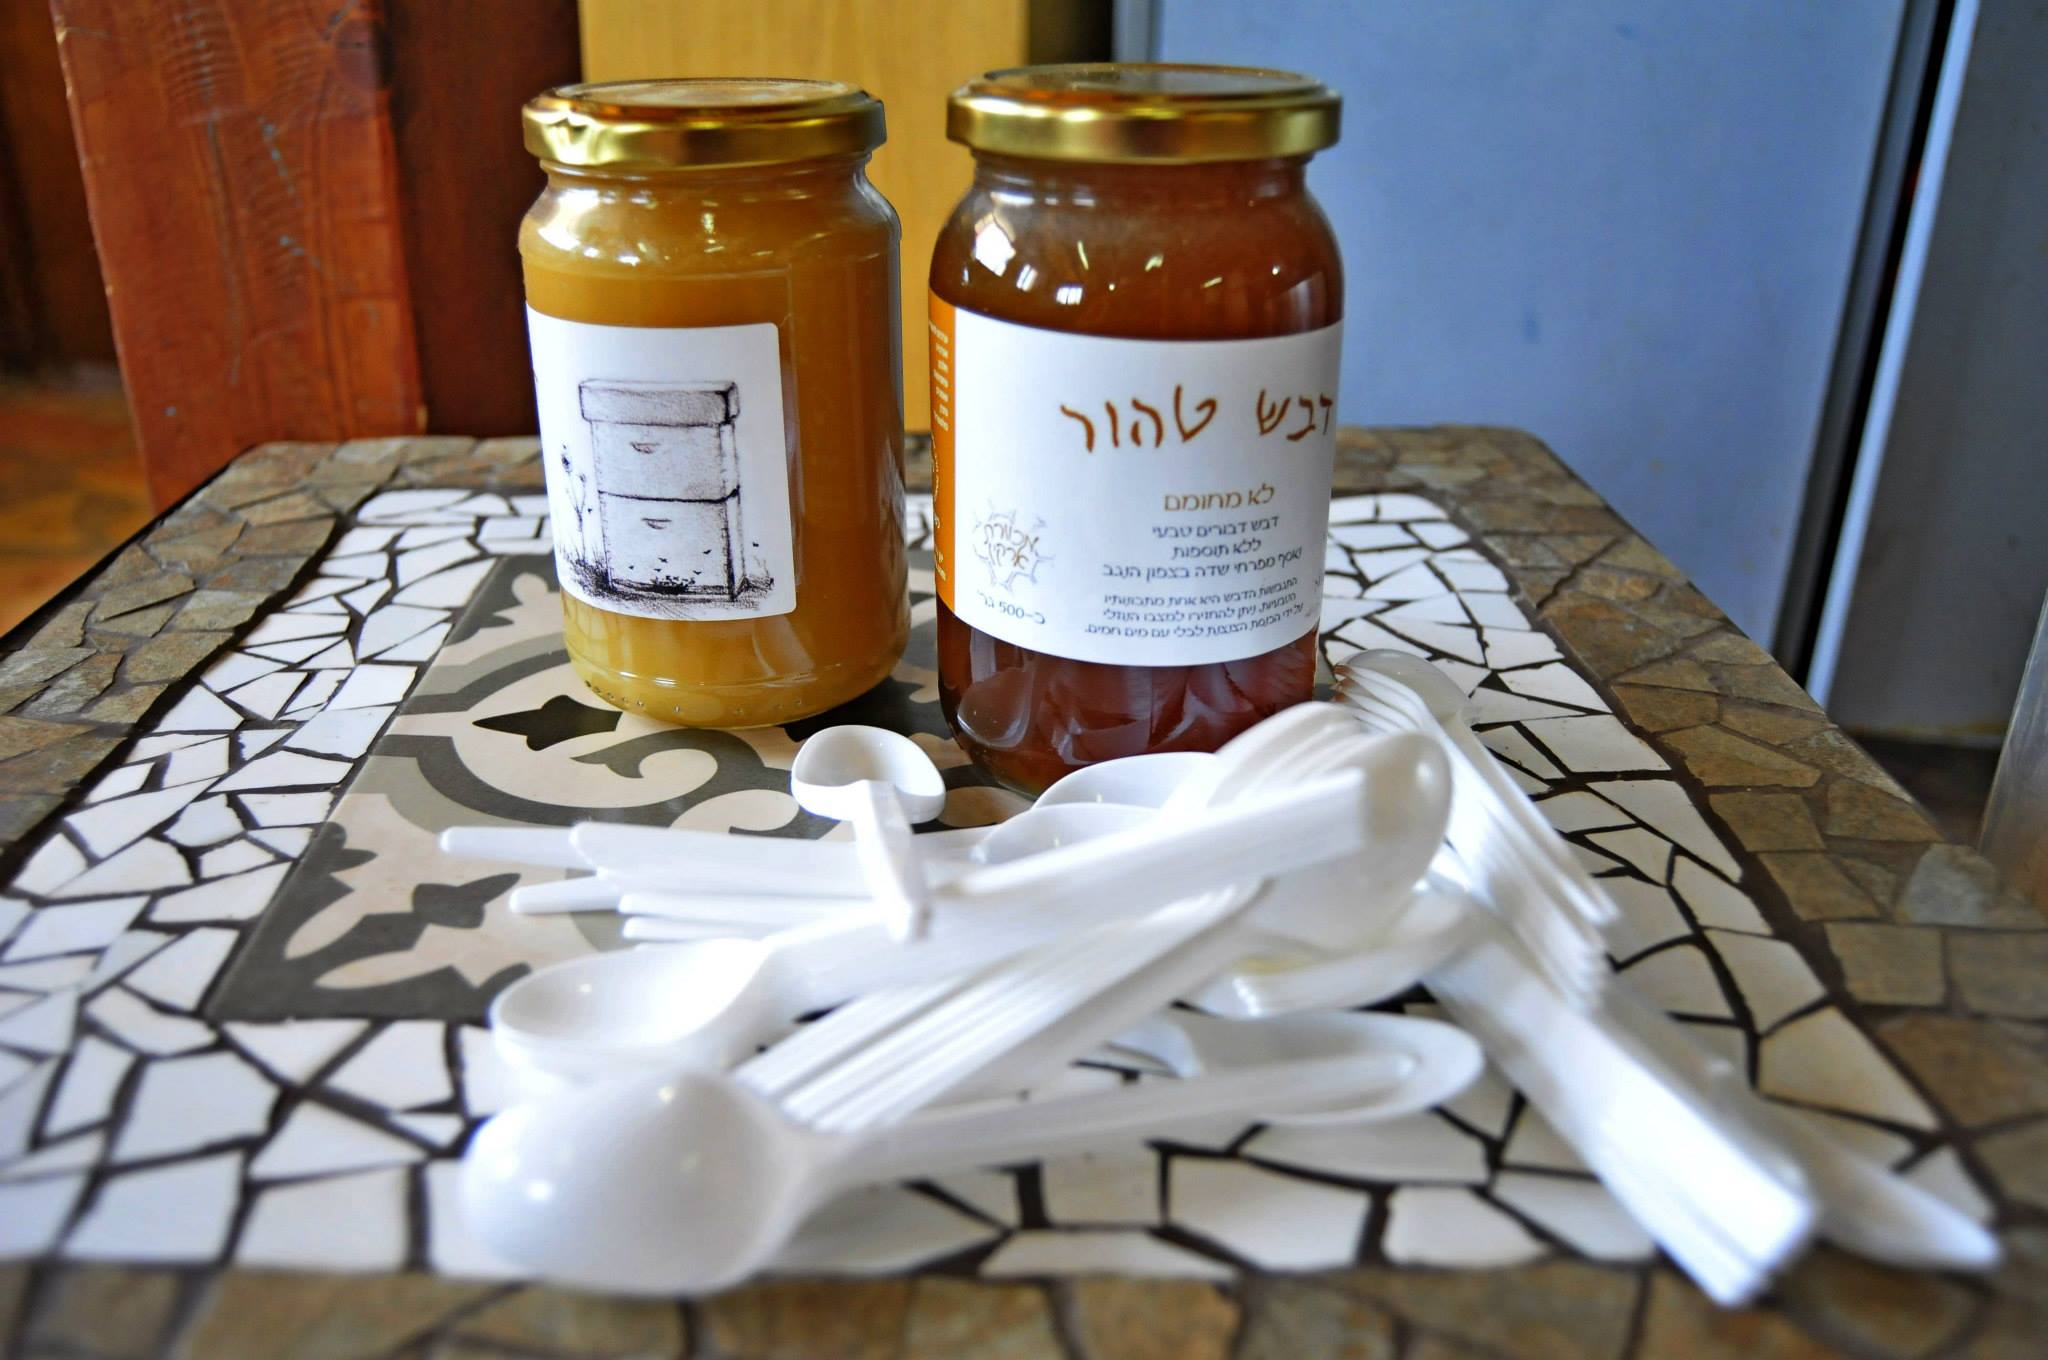 мед из израиля